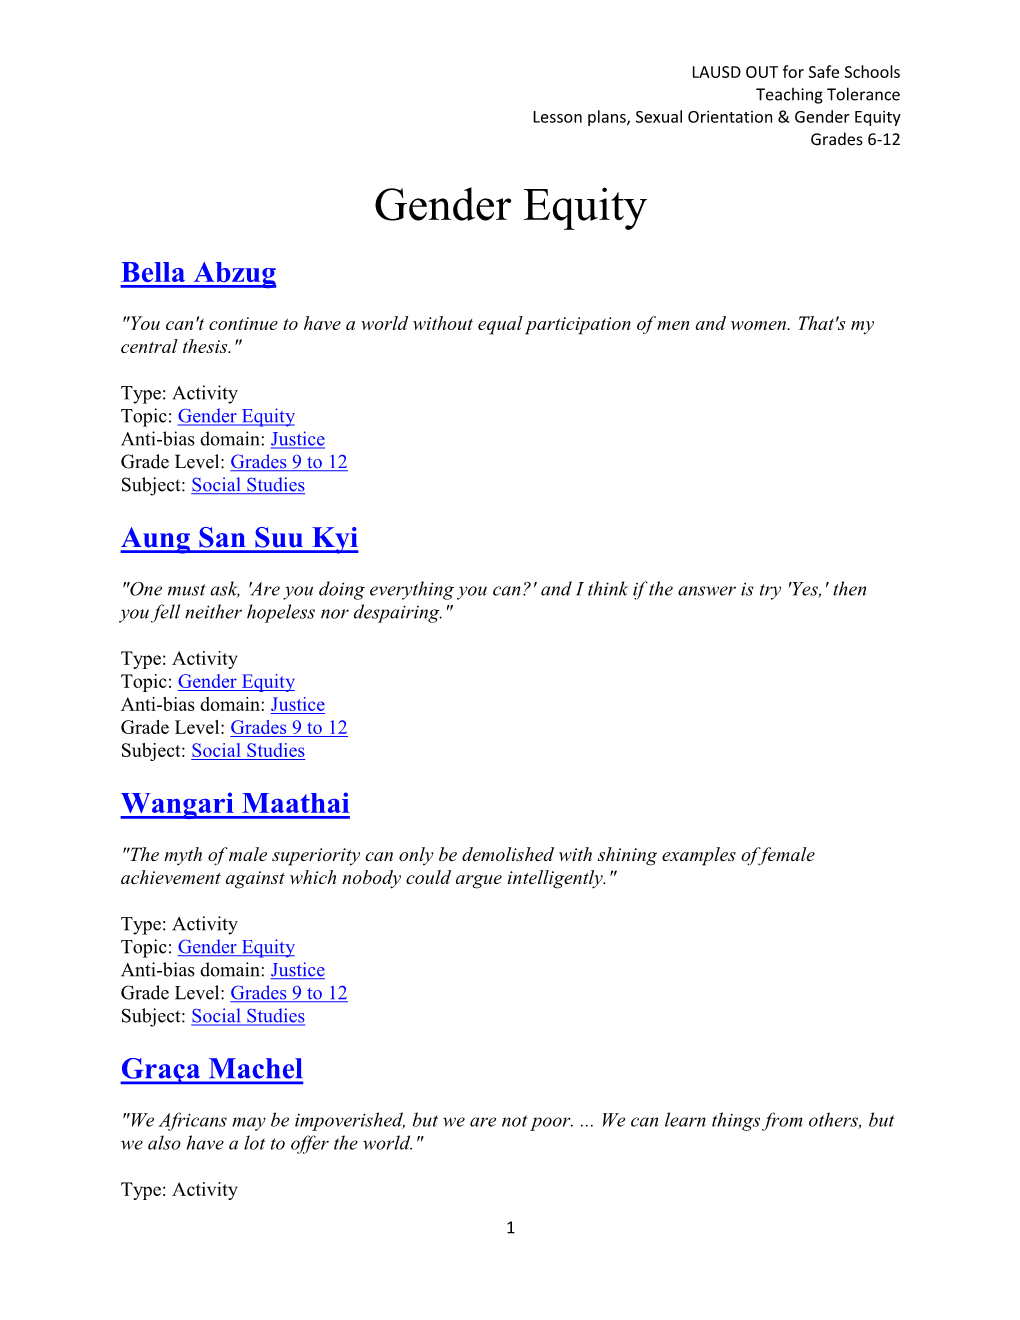 Lesson Plans, Sexual Orientation & Gender Equity, Grades 6-12